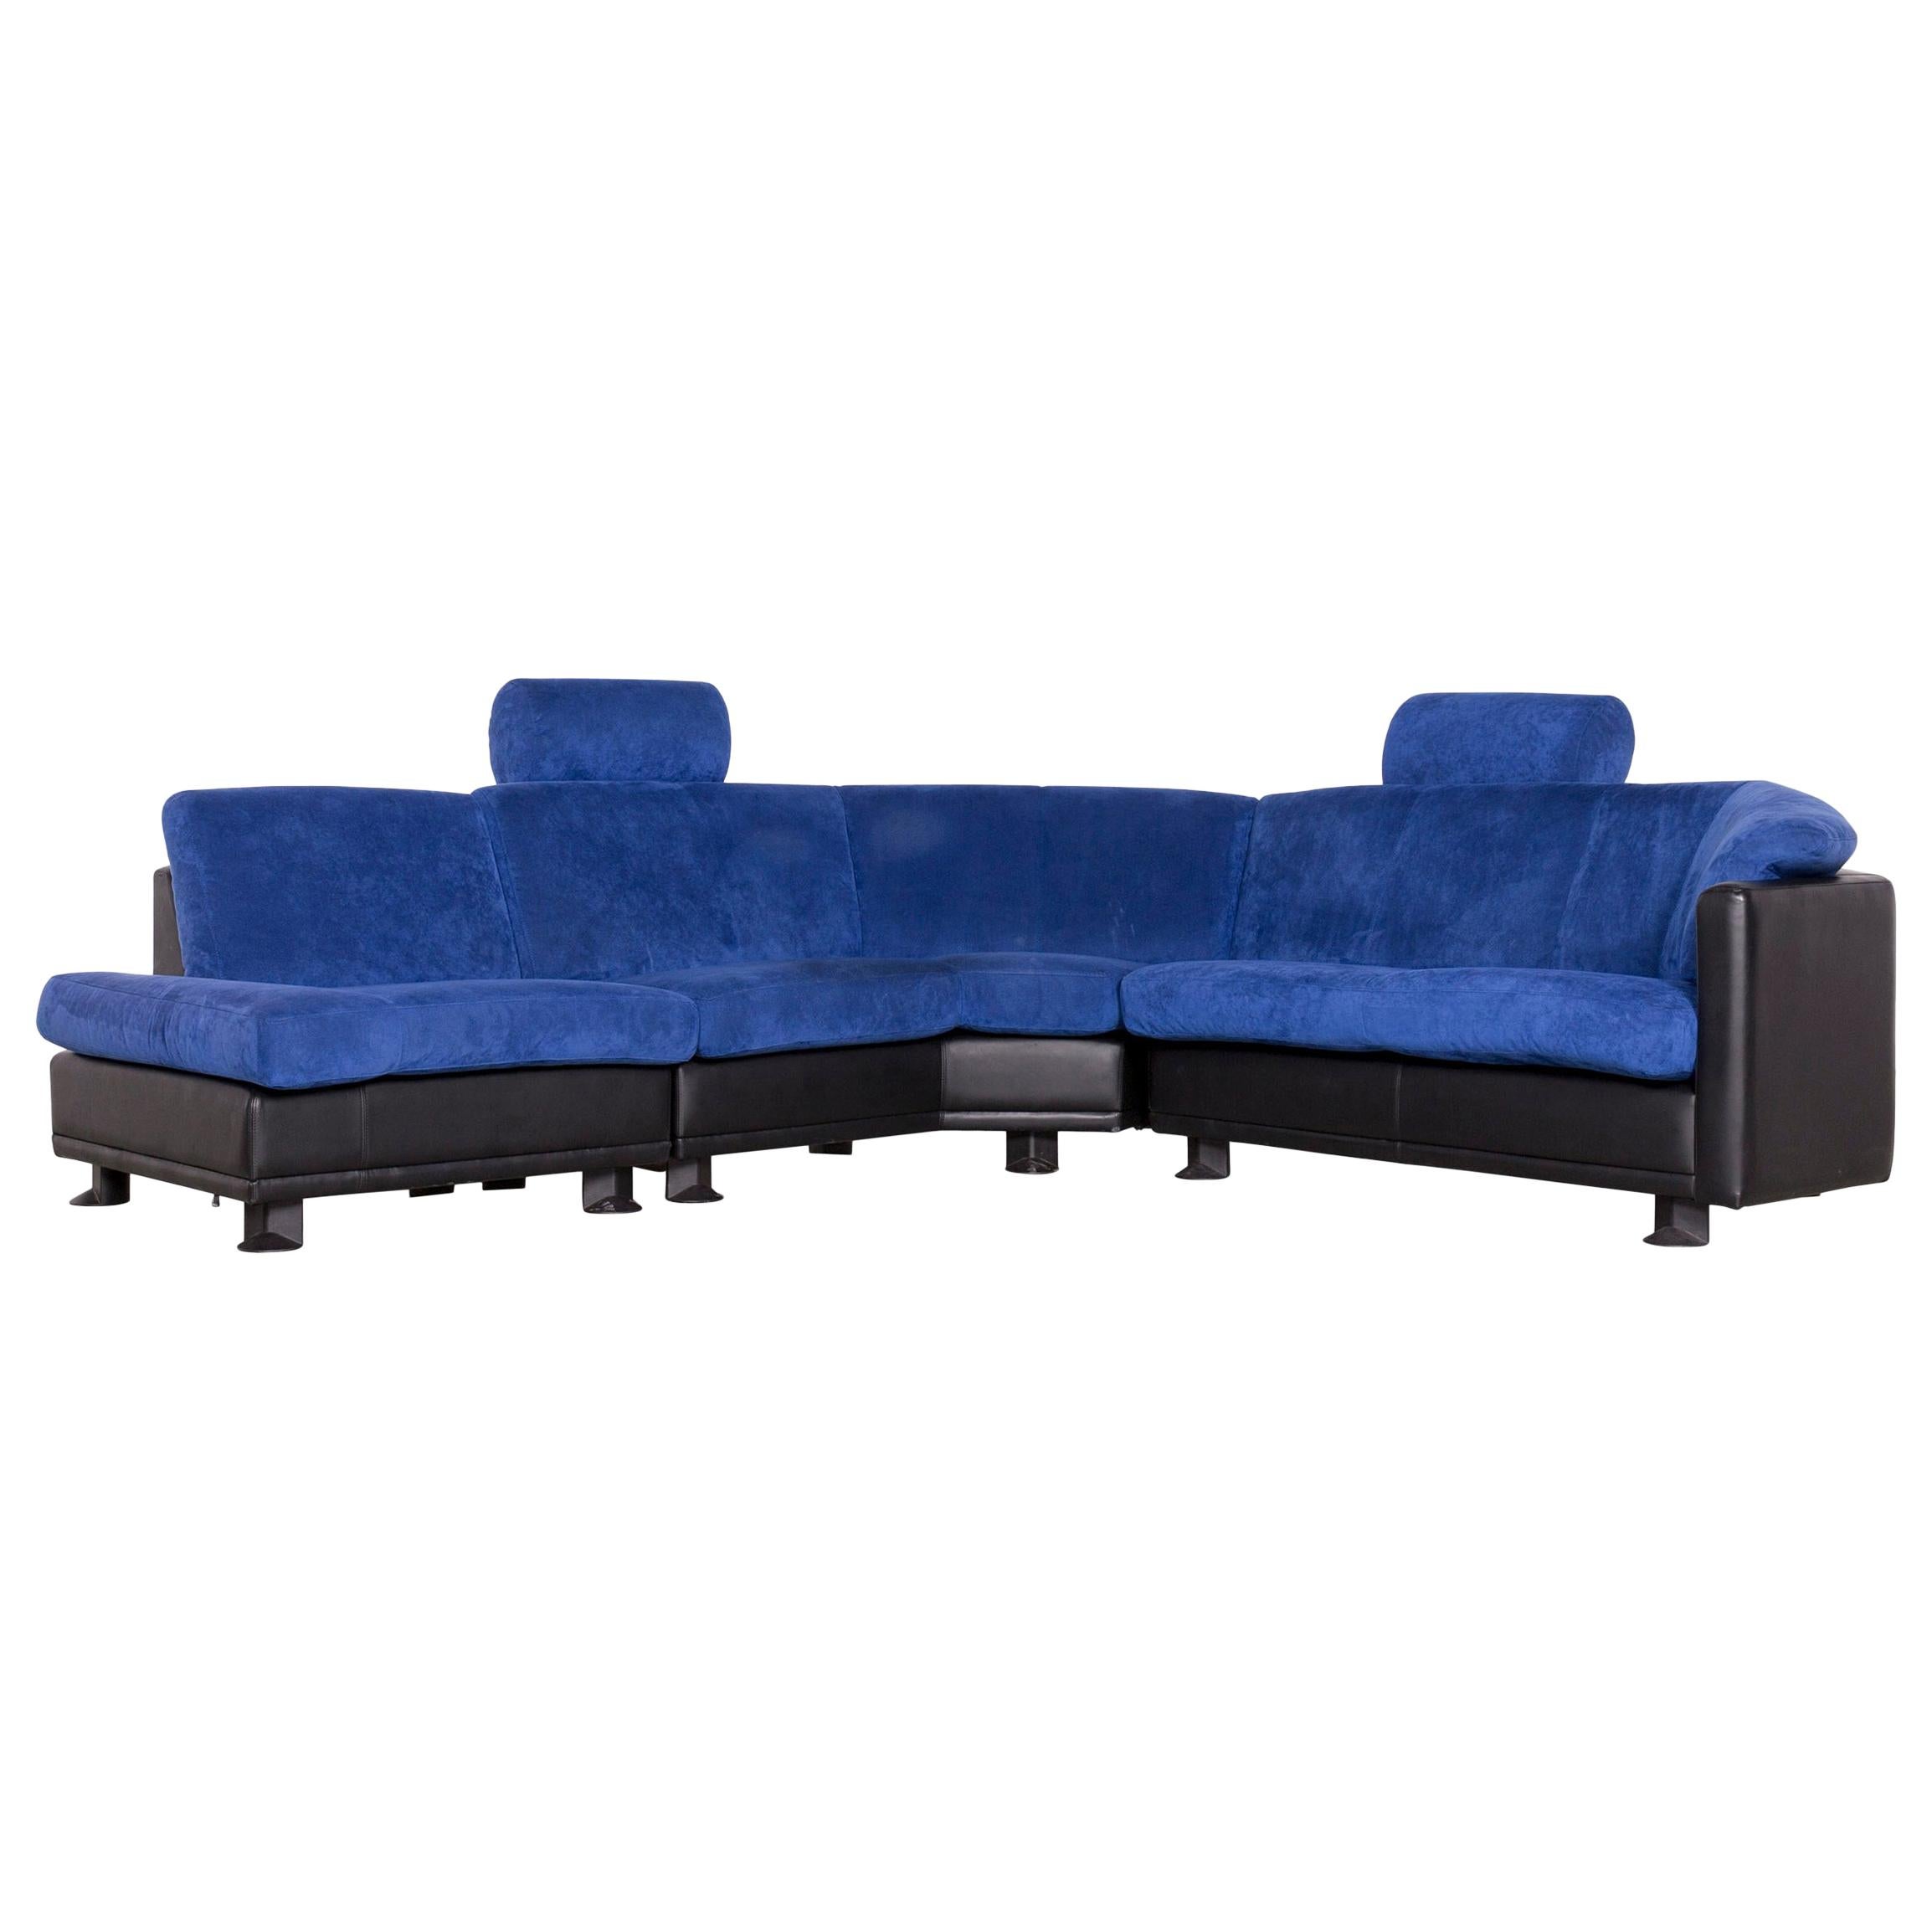 Leolux Antipode Designer Fabric Corner Couch Blue Sofa For Sale